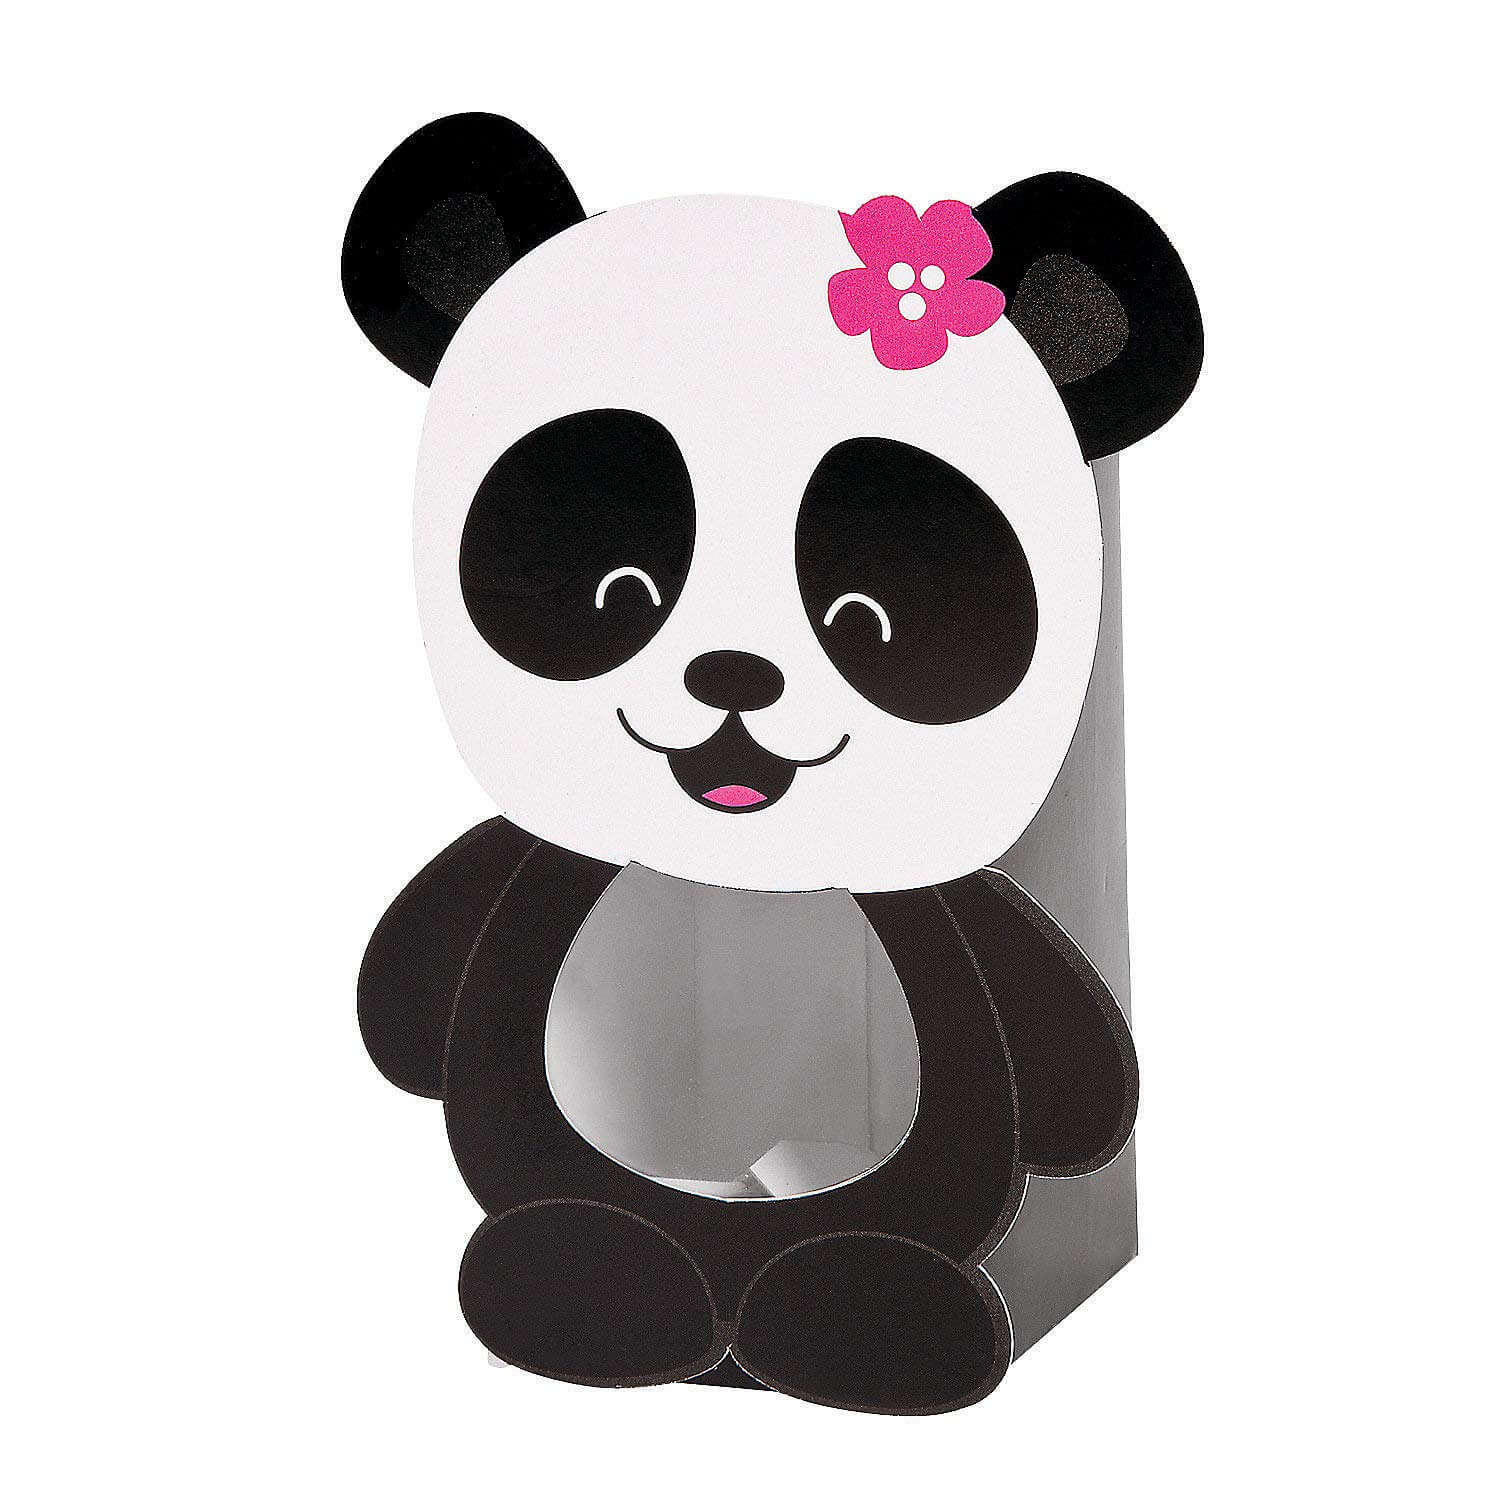 Cute Panda Craft Using Cardboard For Kids